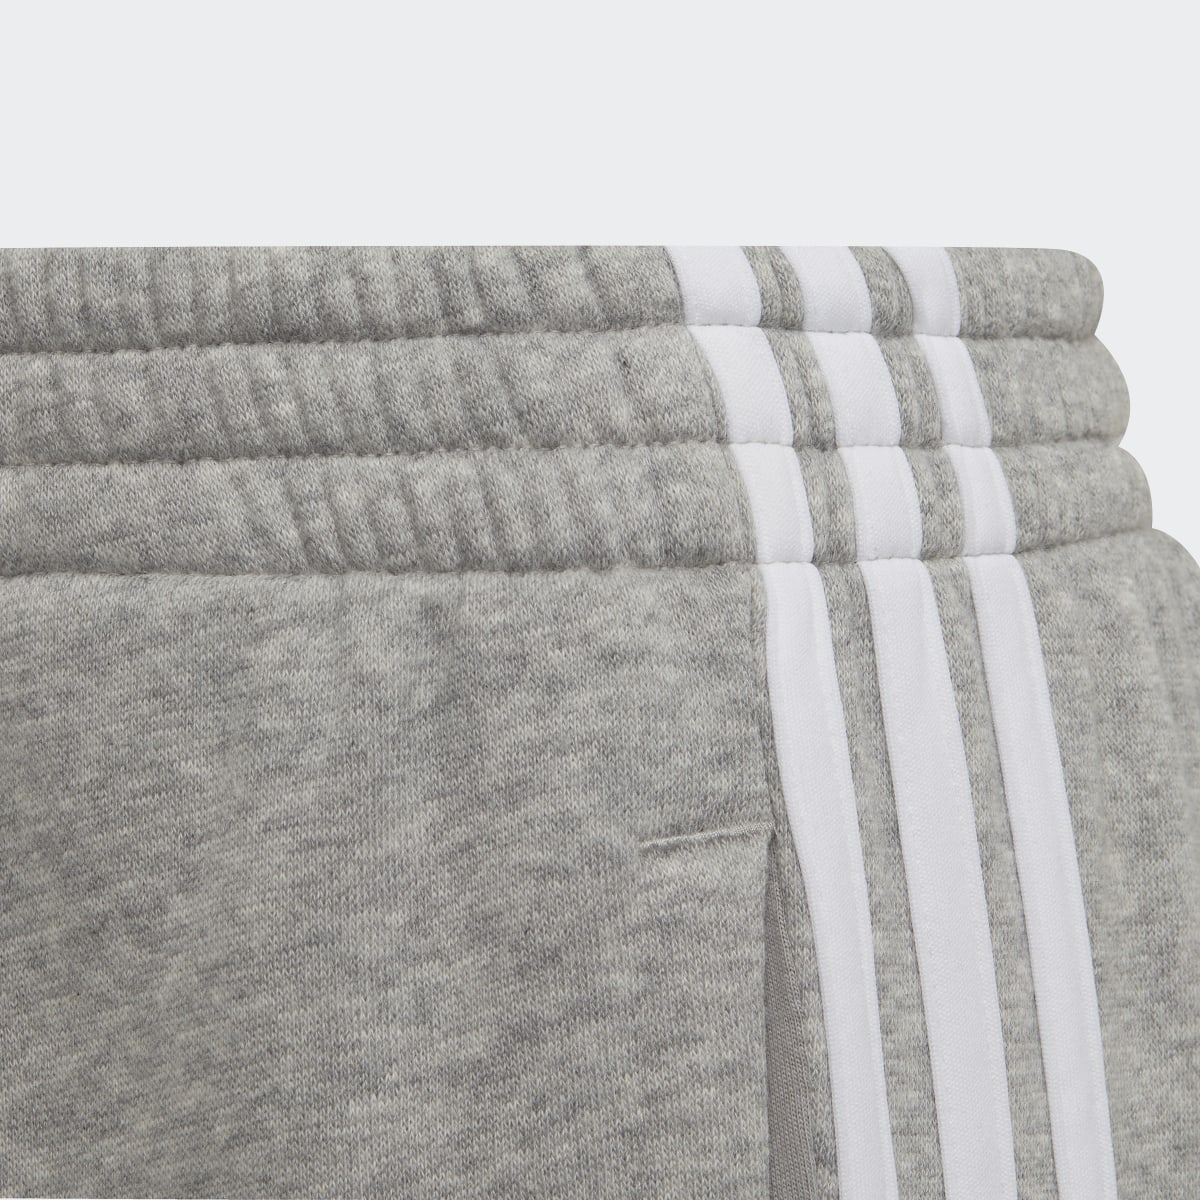 Adidas Essential 3-Stripes Pants. 4